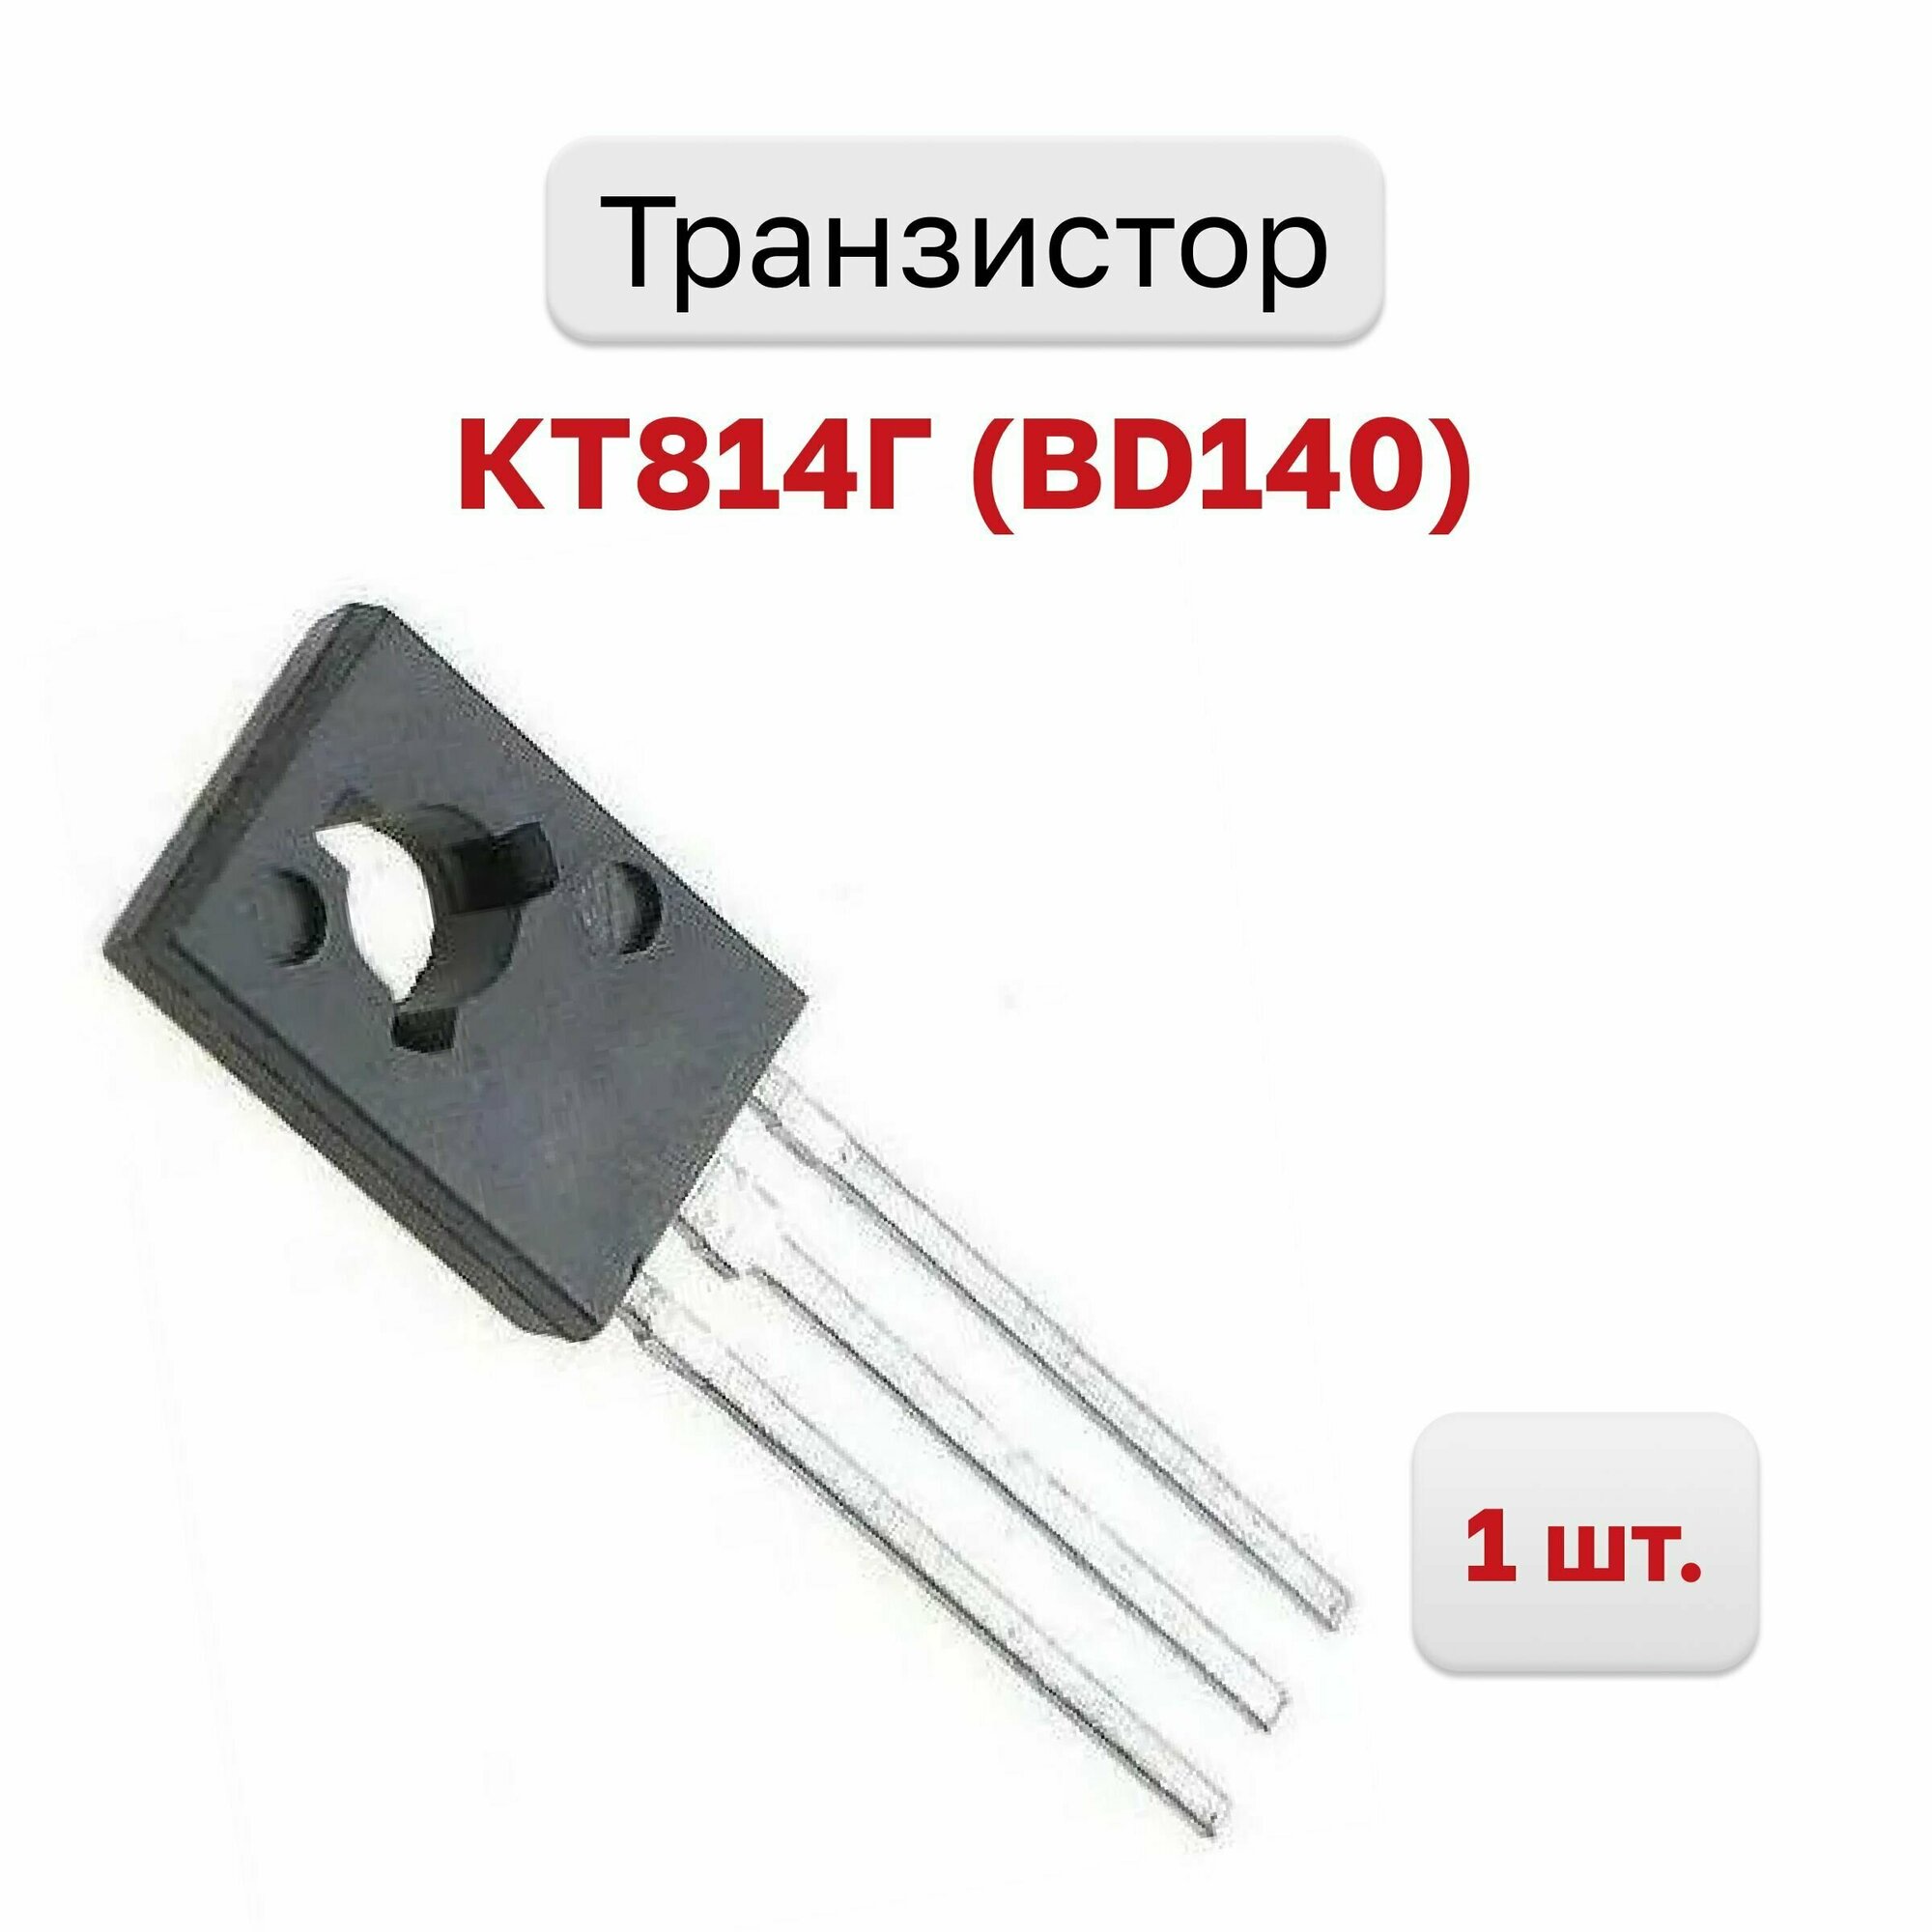 Транзистор КТ814Г (BD140), 1 шт.